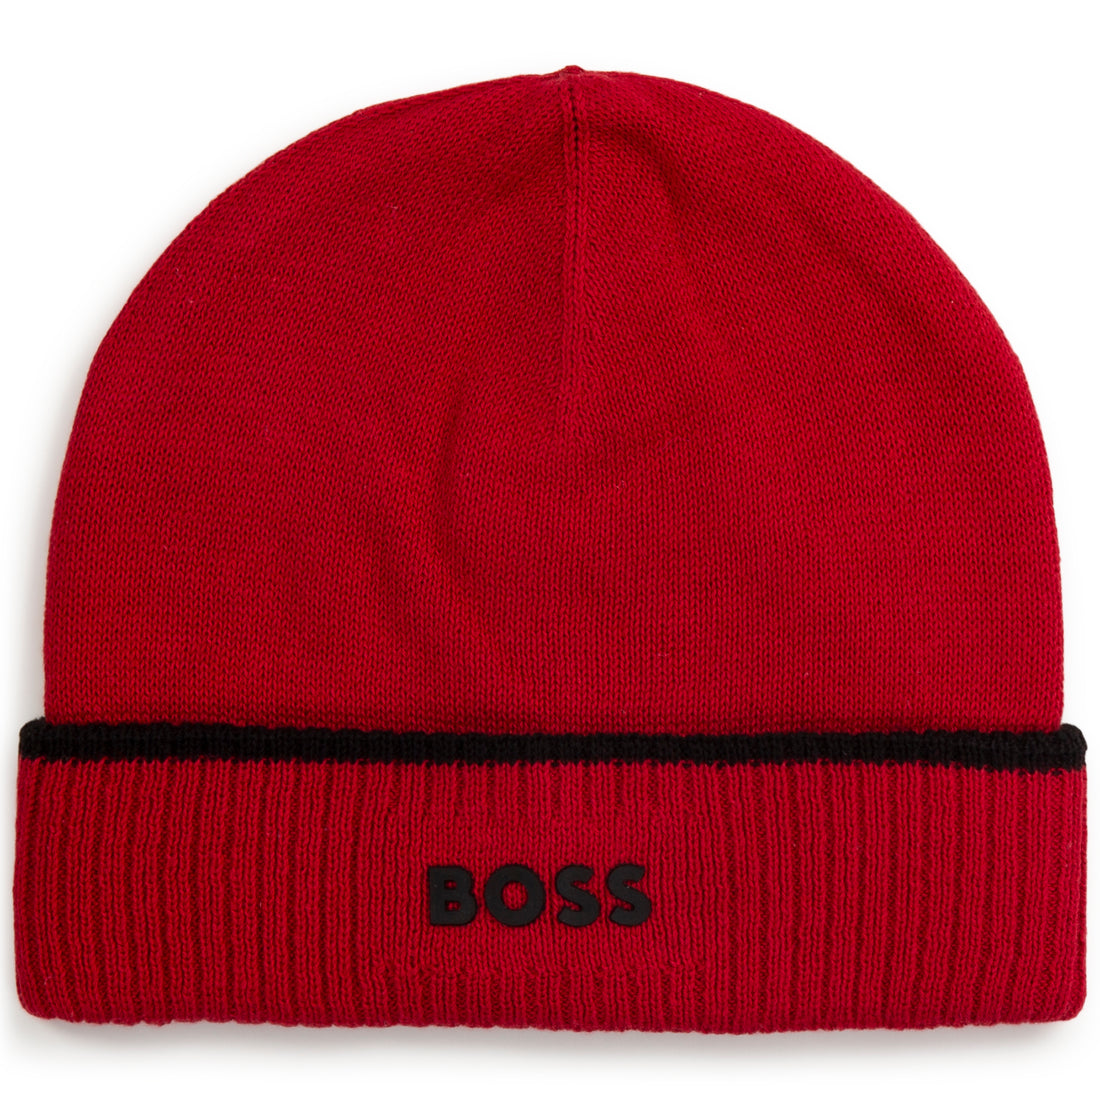 Boss Pull On Hat Style: J01131